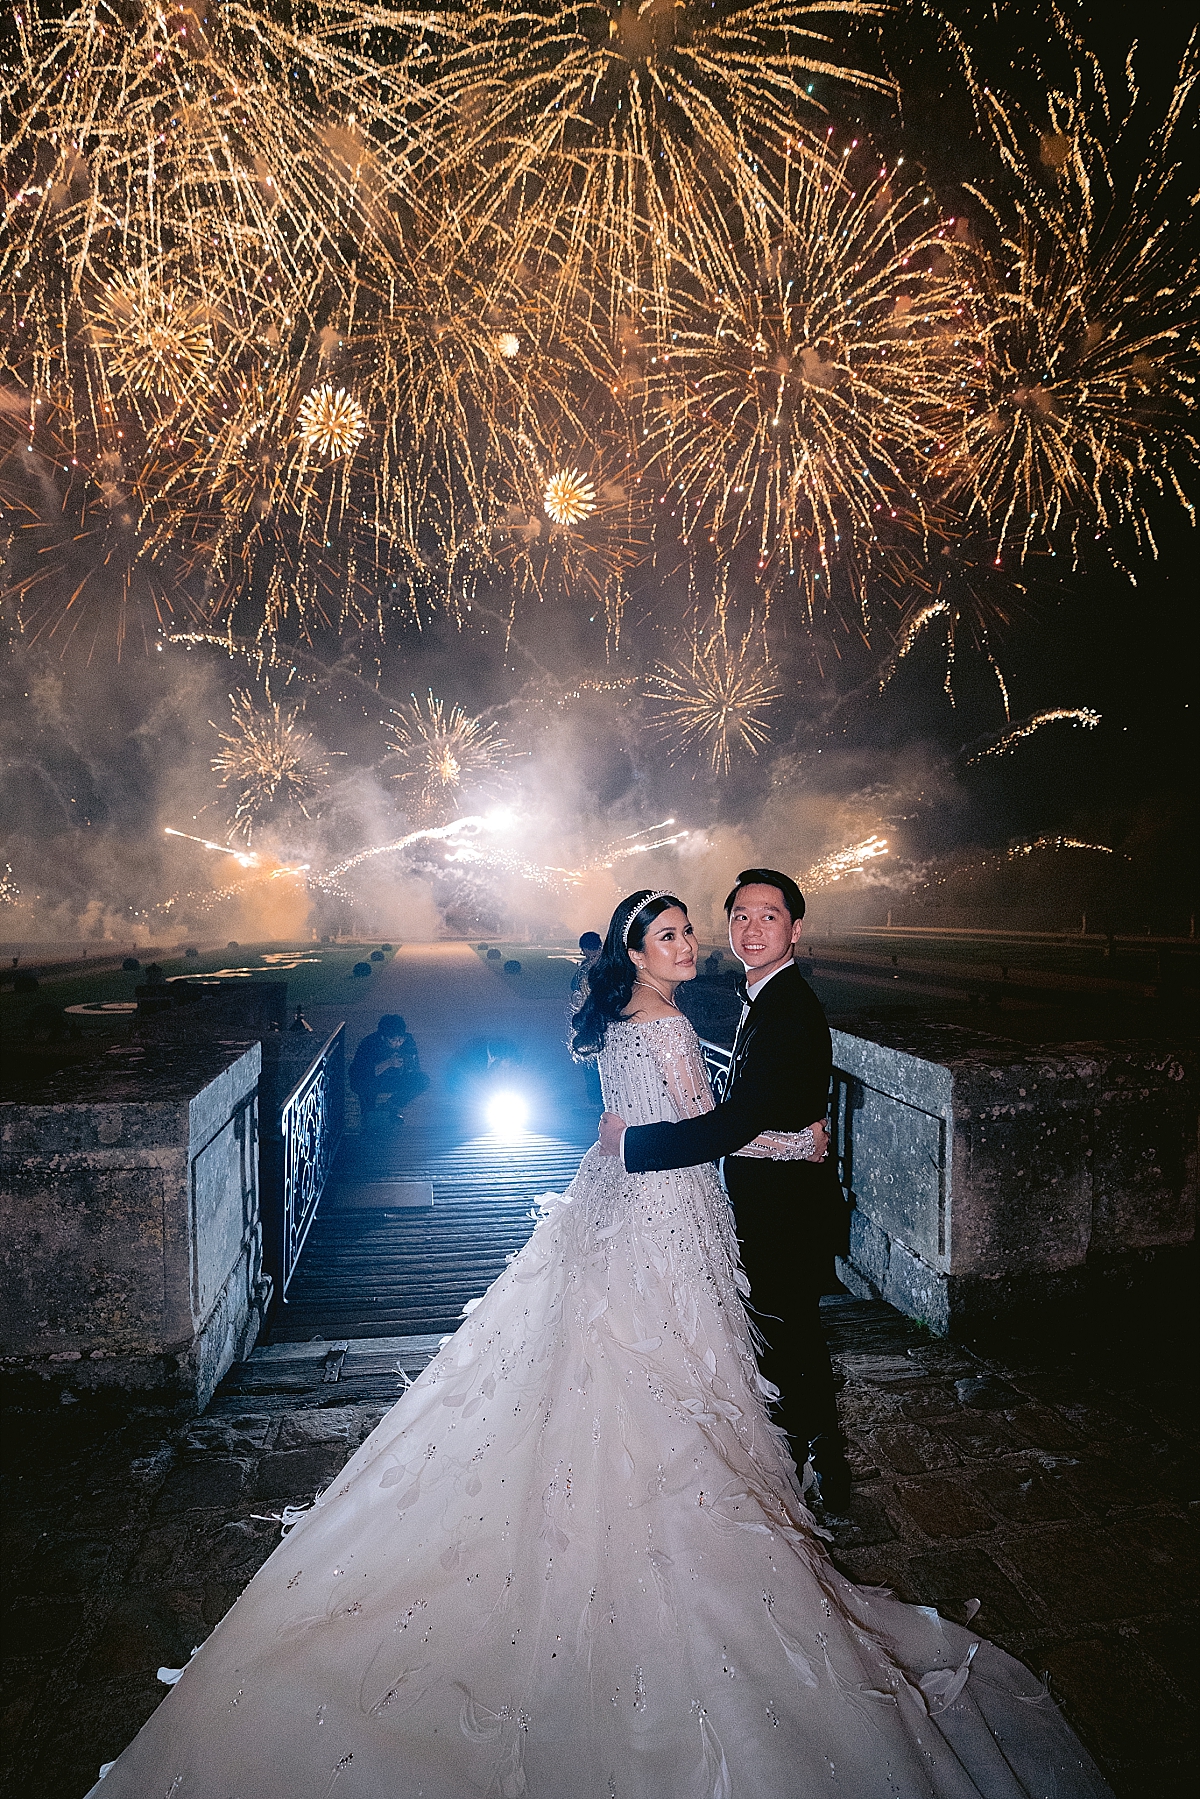 Firework for the wedding of Valencia Tanoesoedibjo & Kevin Sanjaya at Chateau de Vaux le Vicomte 